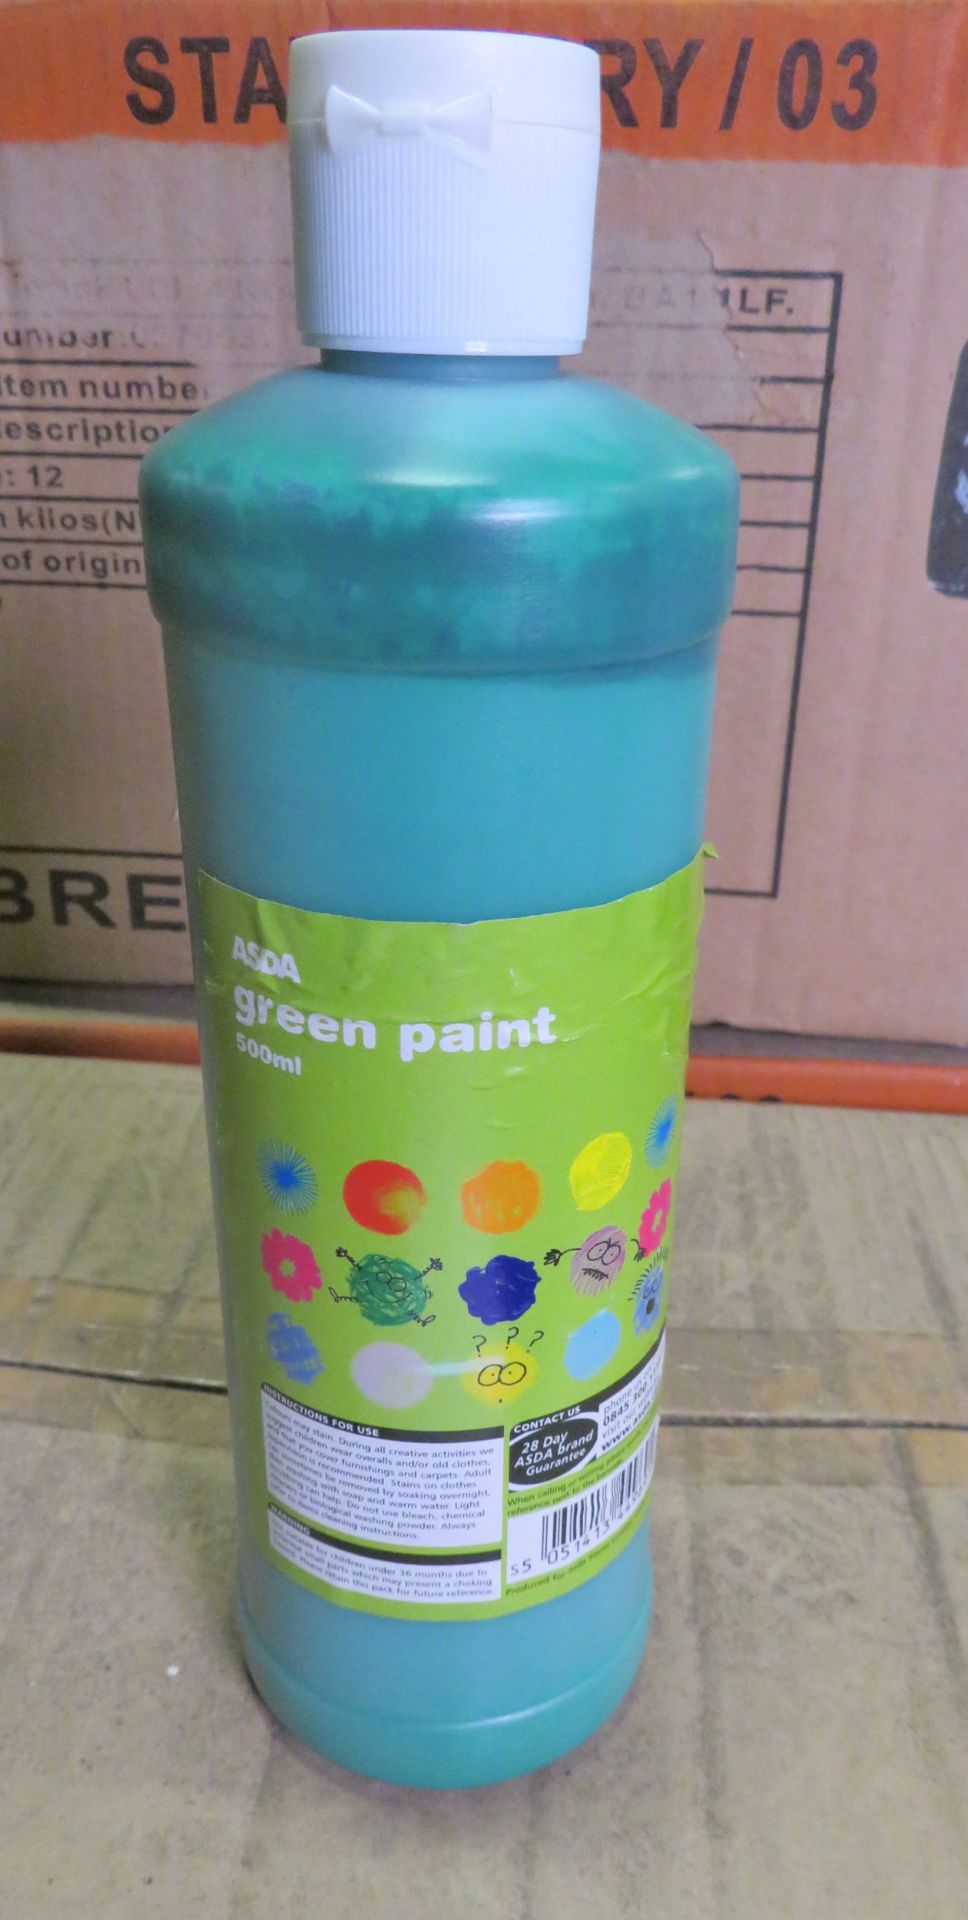 Childrens green paint bottles - 500ml - 6 boxes - 12 bottles per box - Image 2 of 4